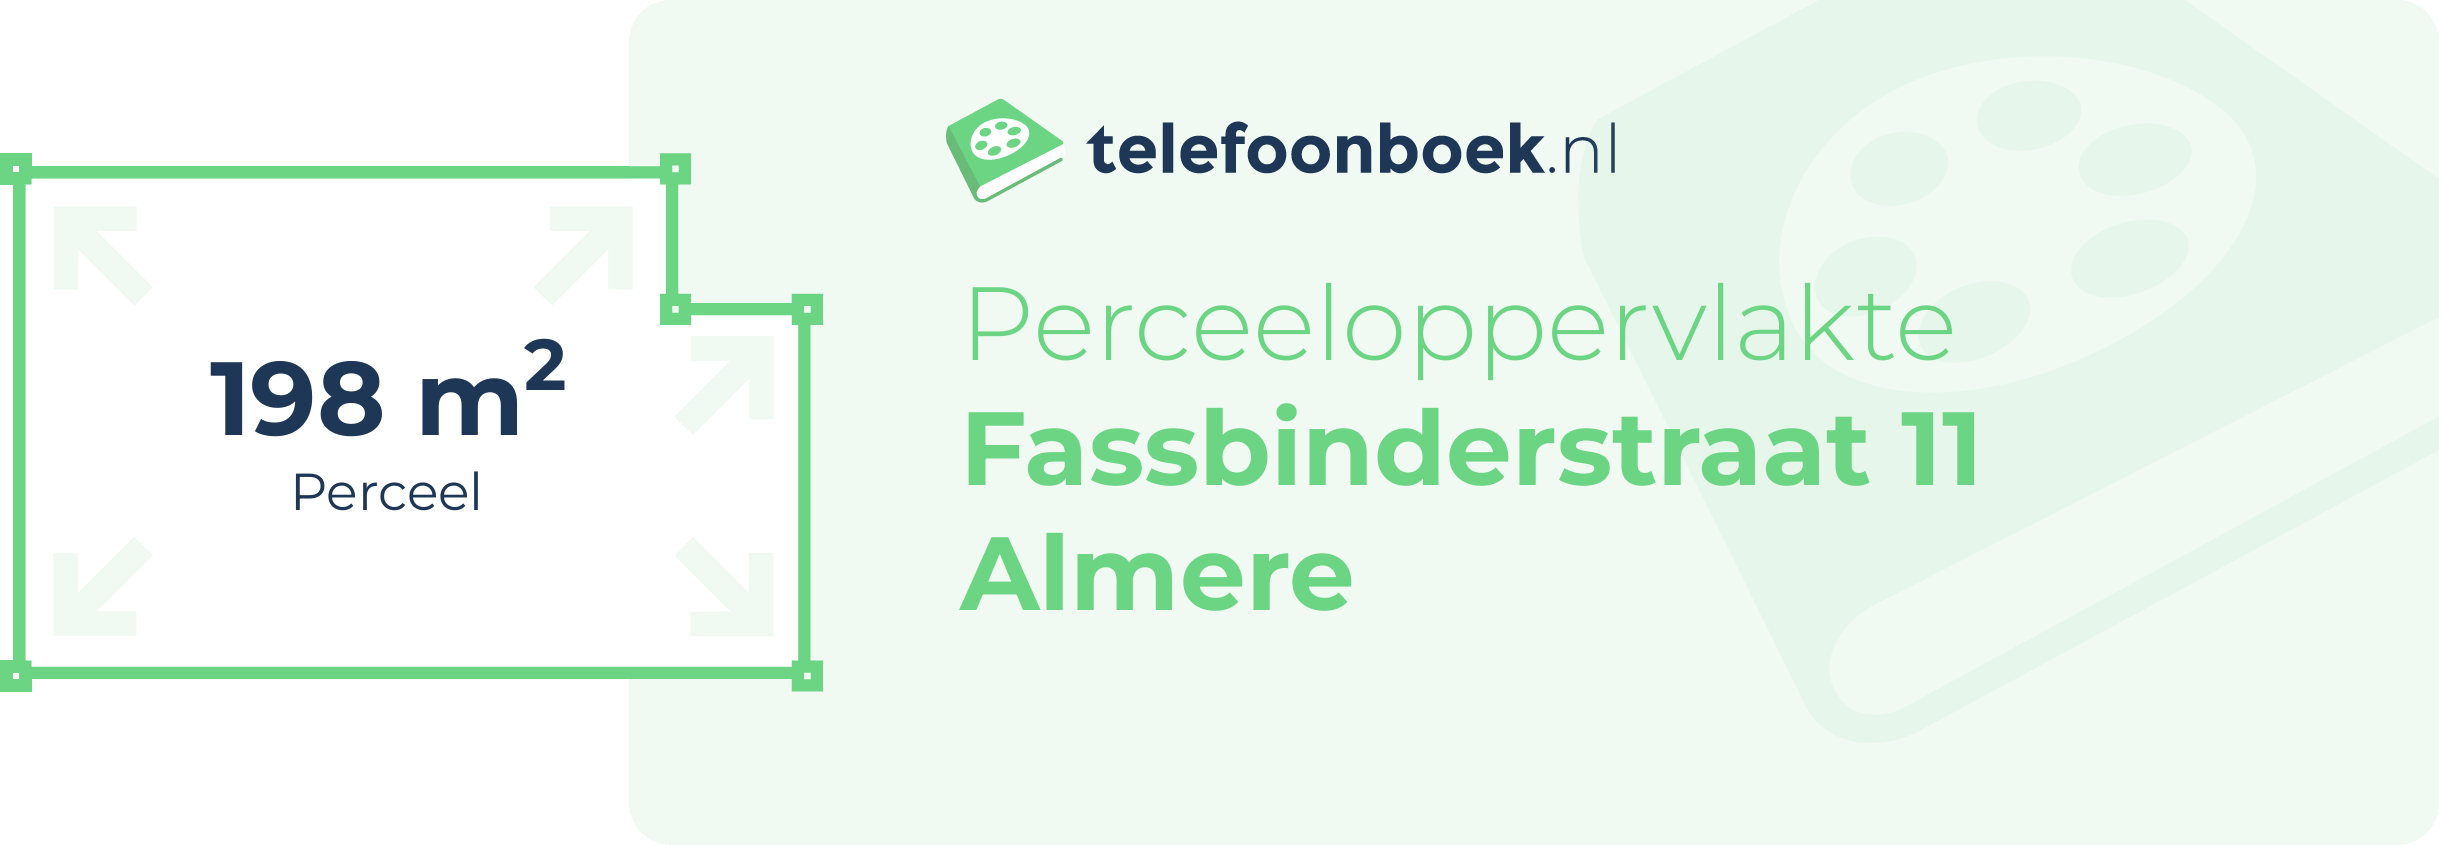 Perceeloppervlakte Fassbinderstraat 11 Almere